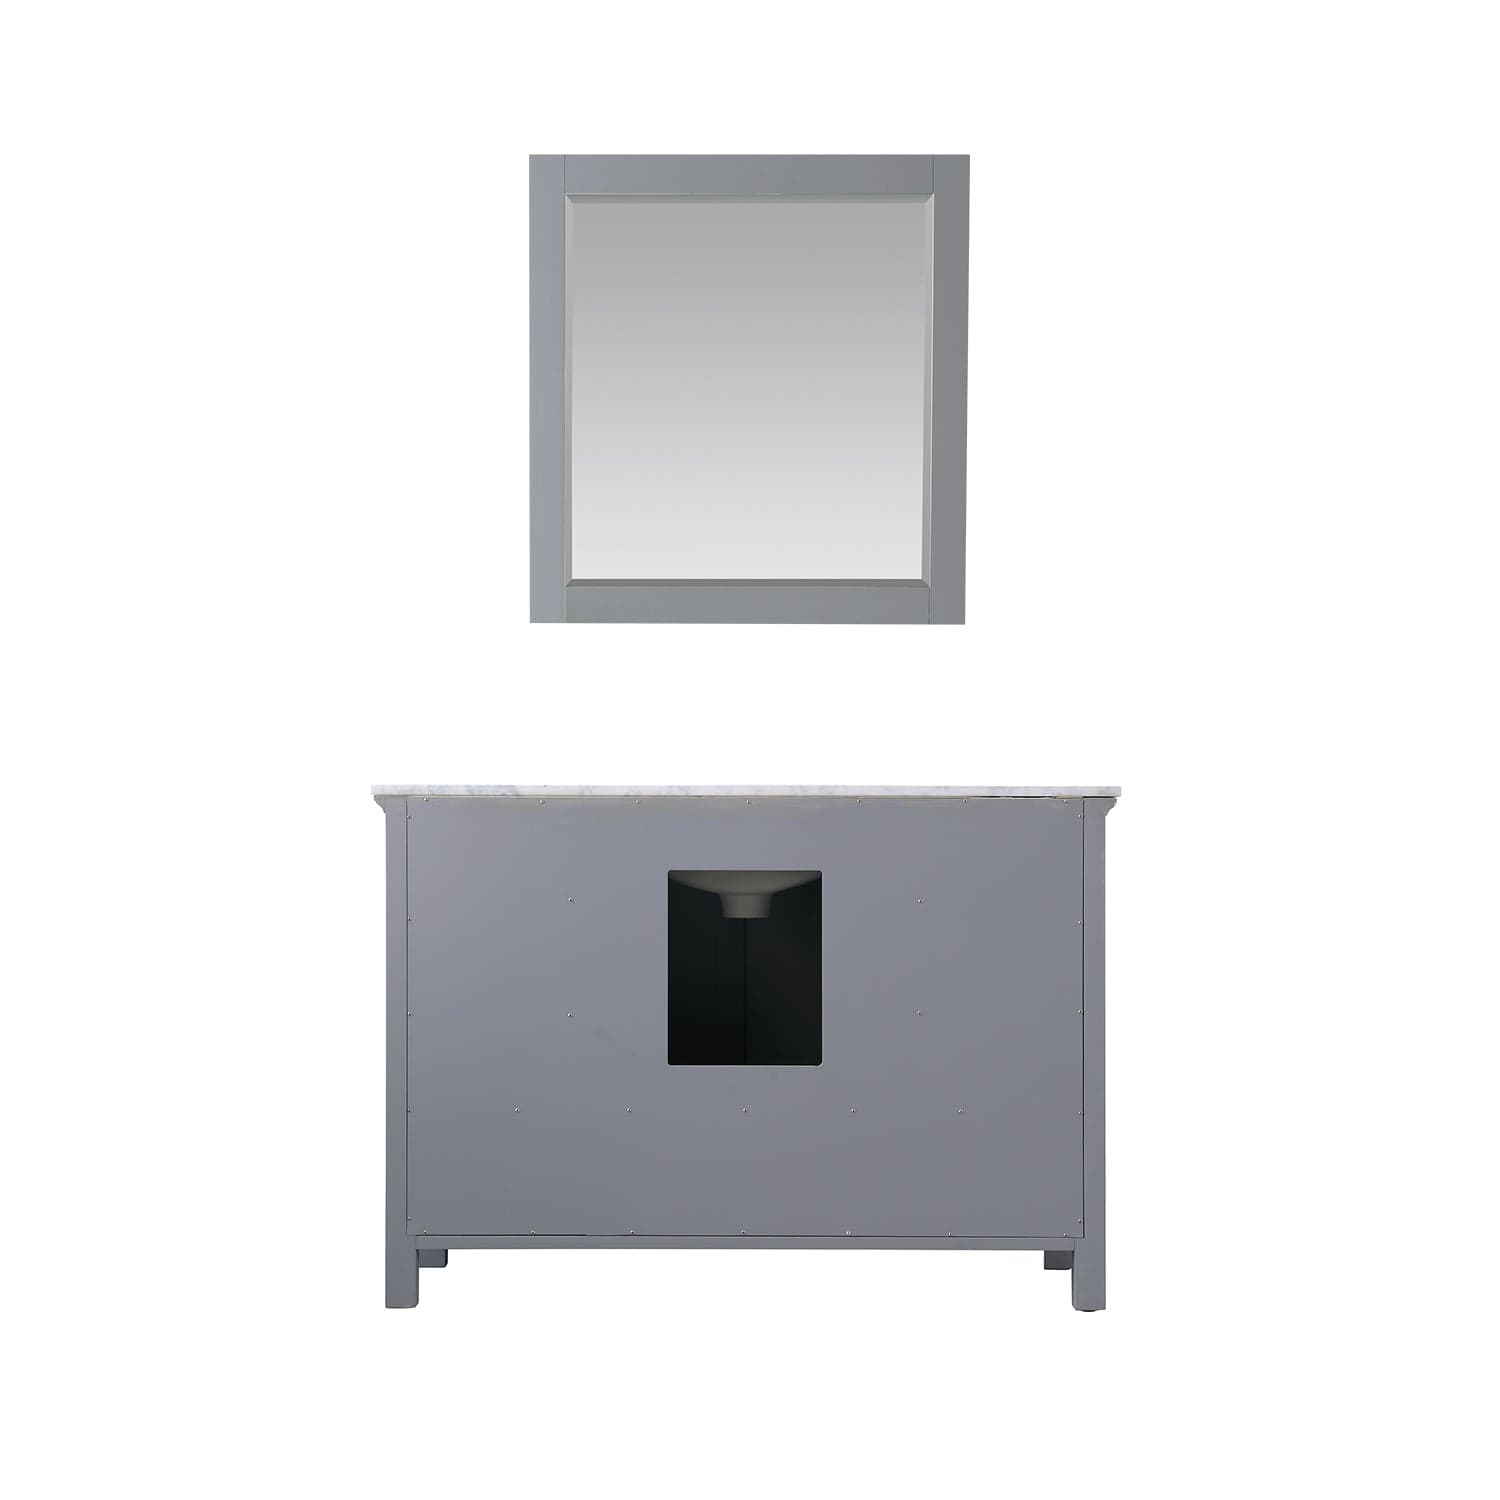 Altair Isla 48" Single Bathroom Vanity Set in Gray and Carrara White Marble Countertop with Mirror 538048-GR-CA - Molaix631112970839Vanity538048-GR-CA